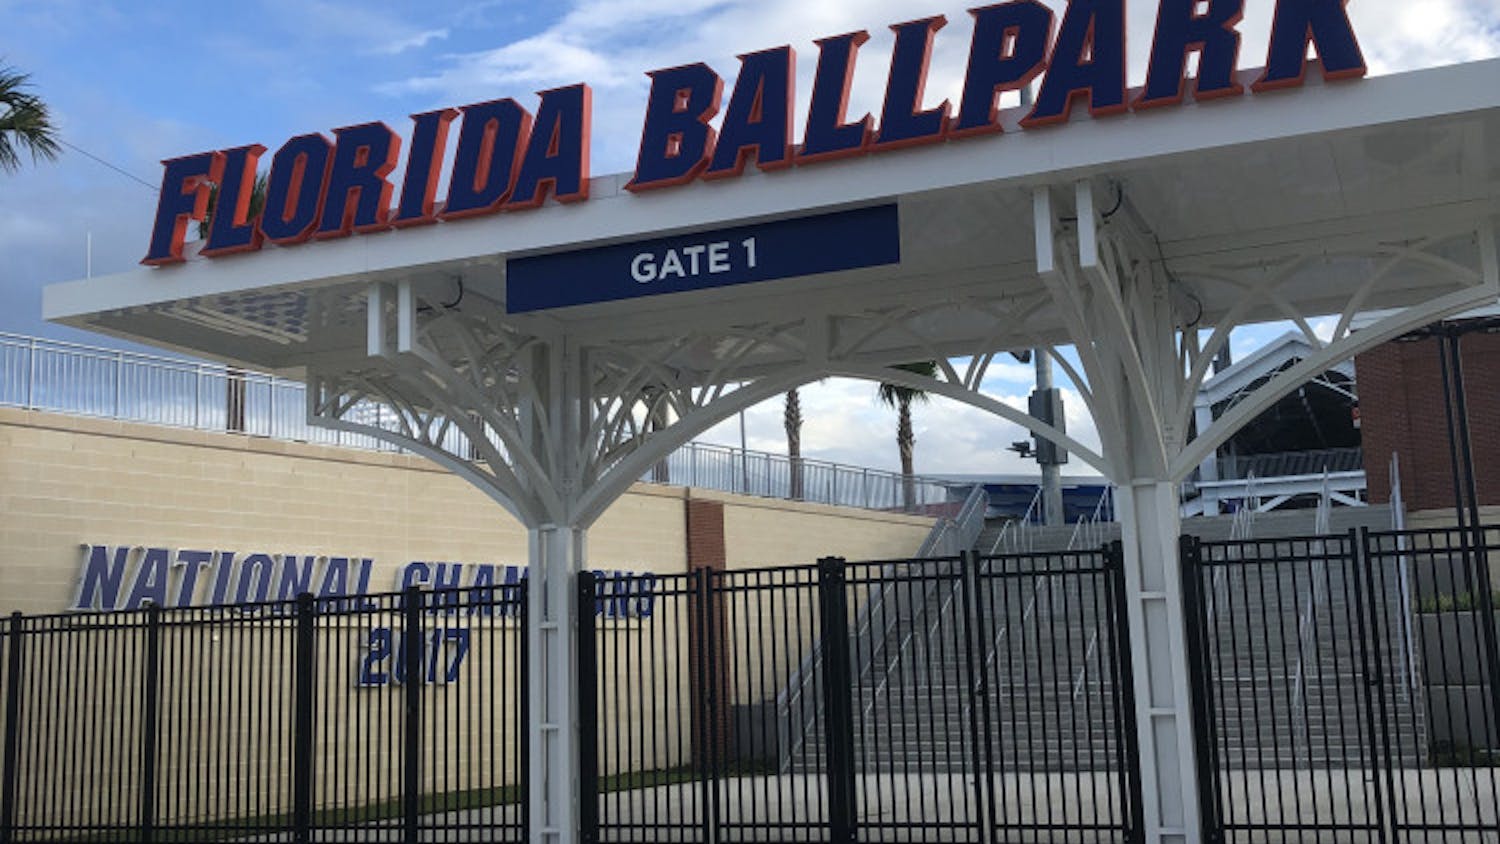 Gate 1 of Florida Ballpark. The new stadium, located next to Donald R. Dizney Stadium along Hull Road, has a capacity of over 7,000. 